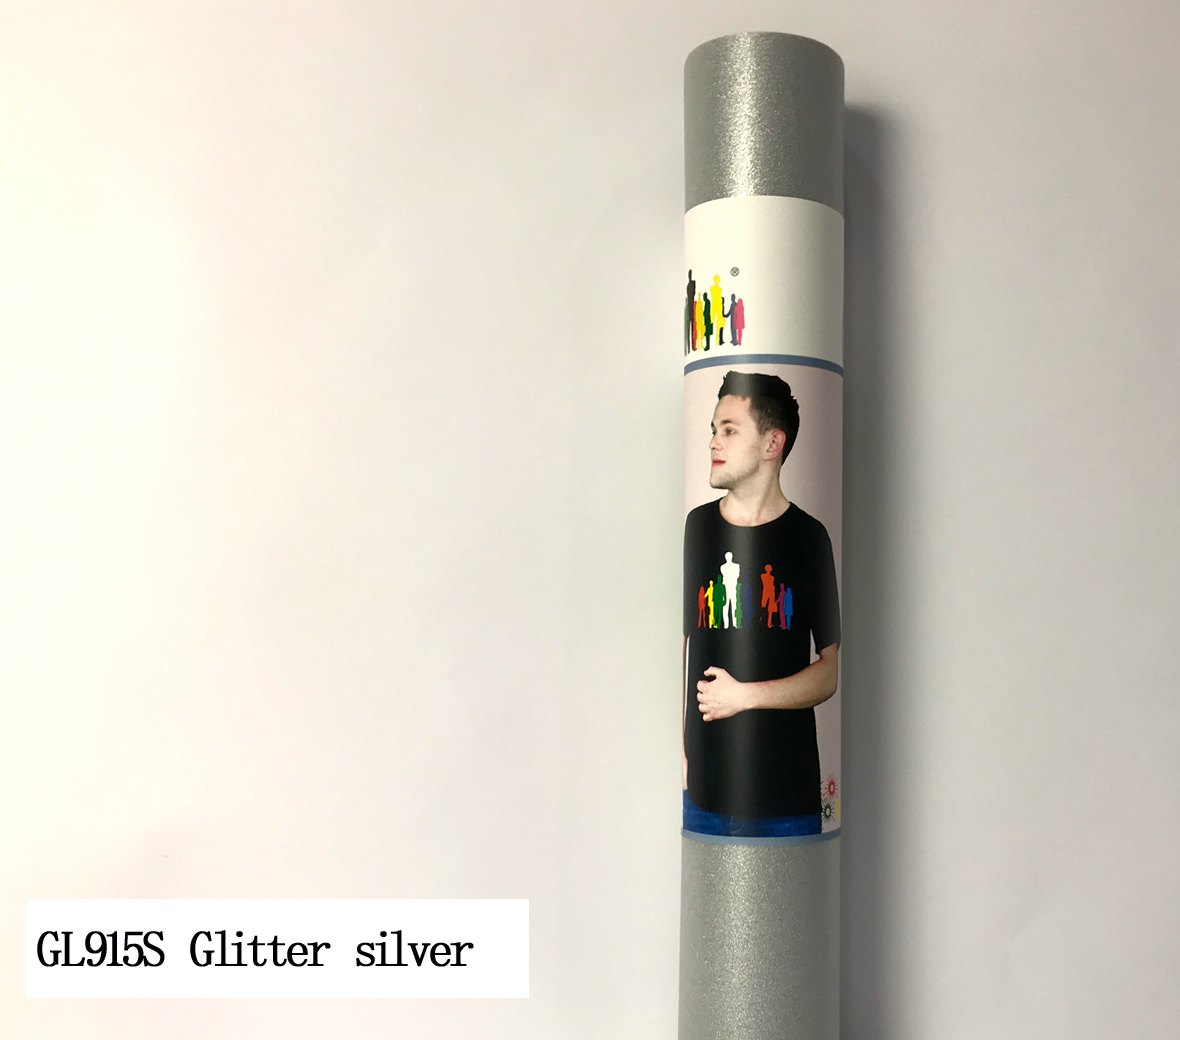 GL915S Glitter silver